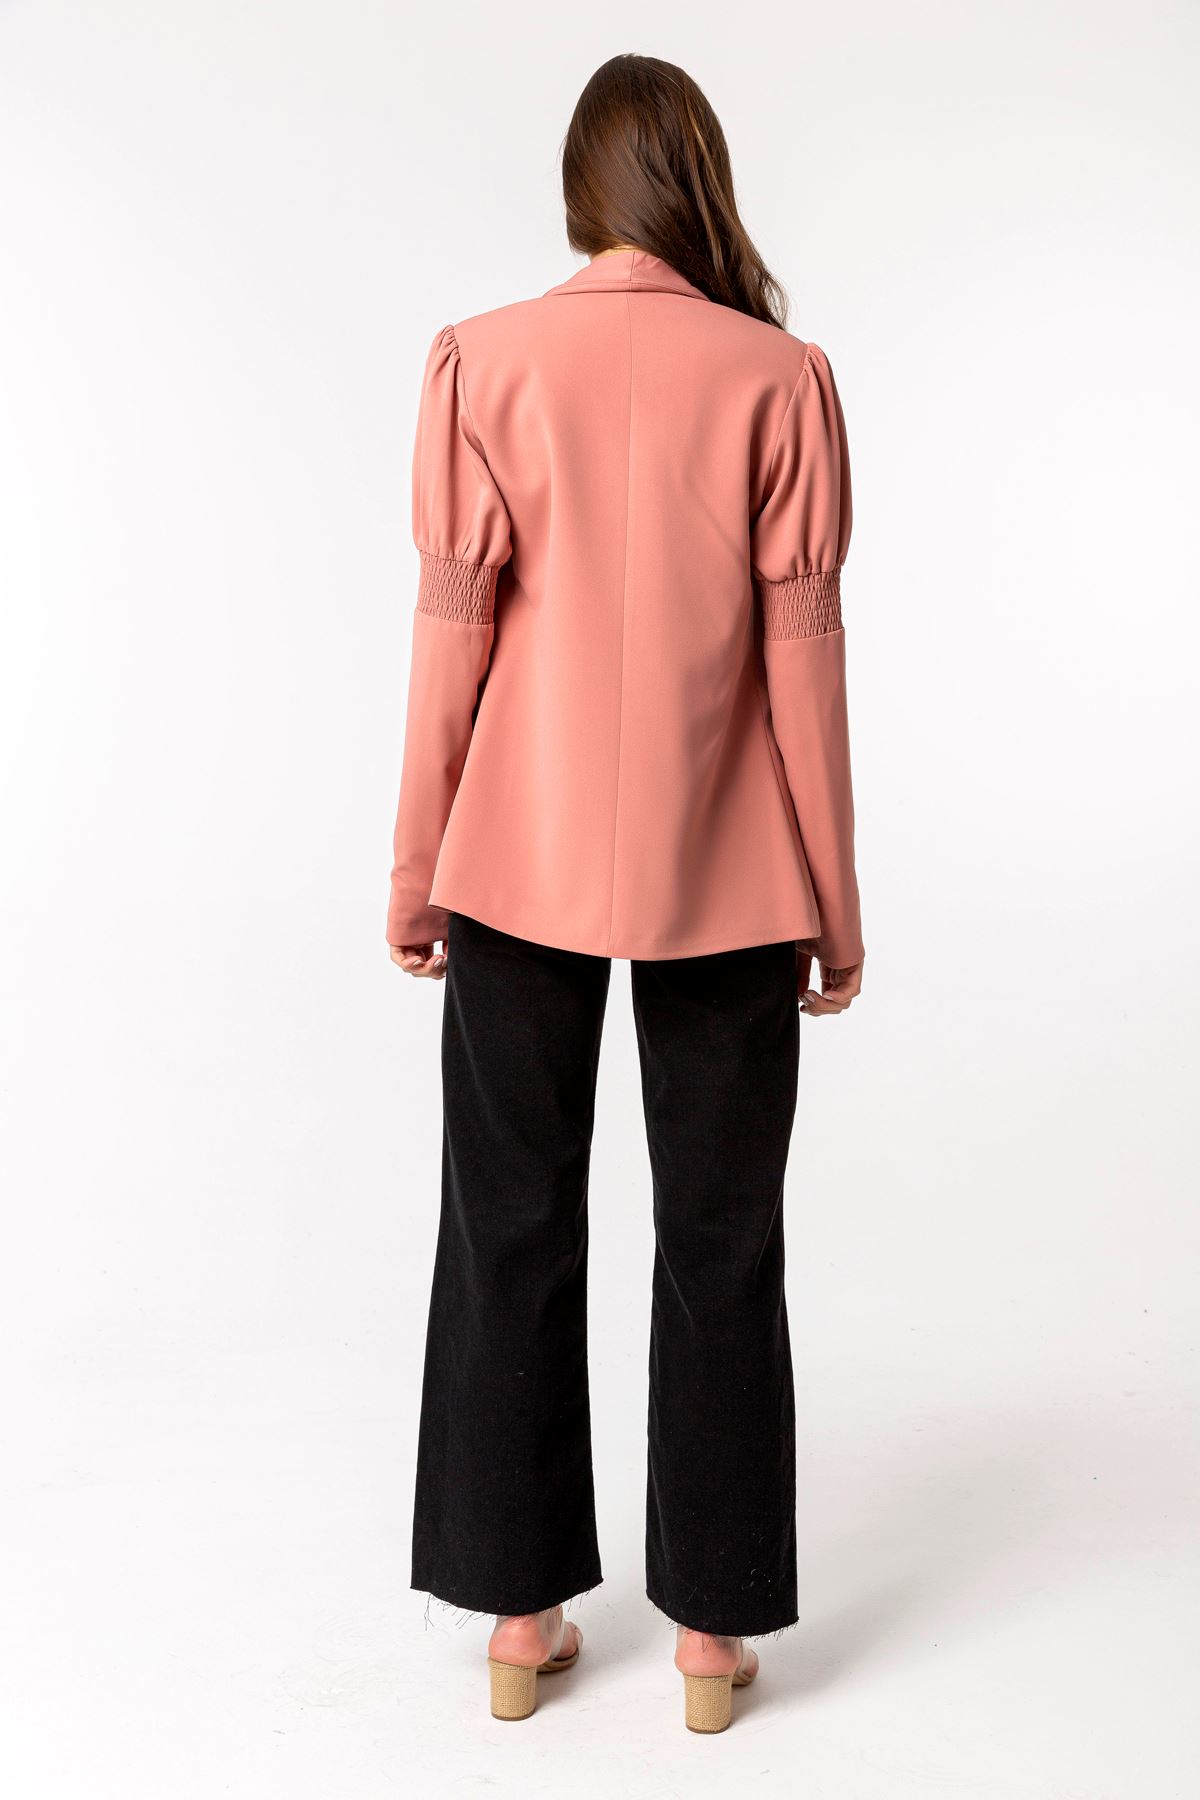 Licra Fabric Long Sleeve Revere Collar Hip Height Classical Women Jacket - Light Pink